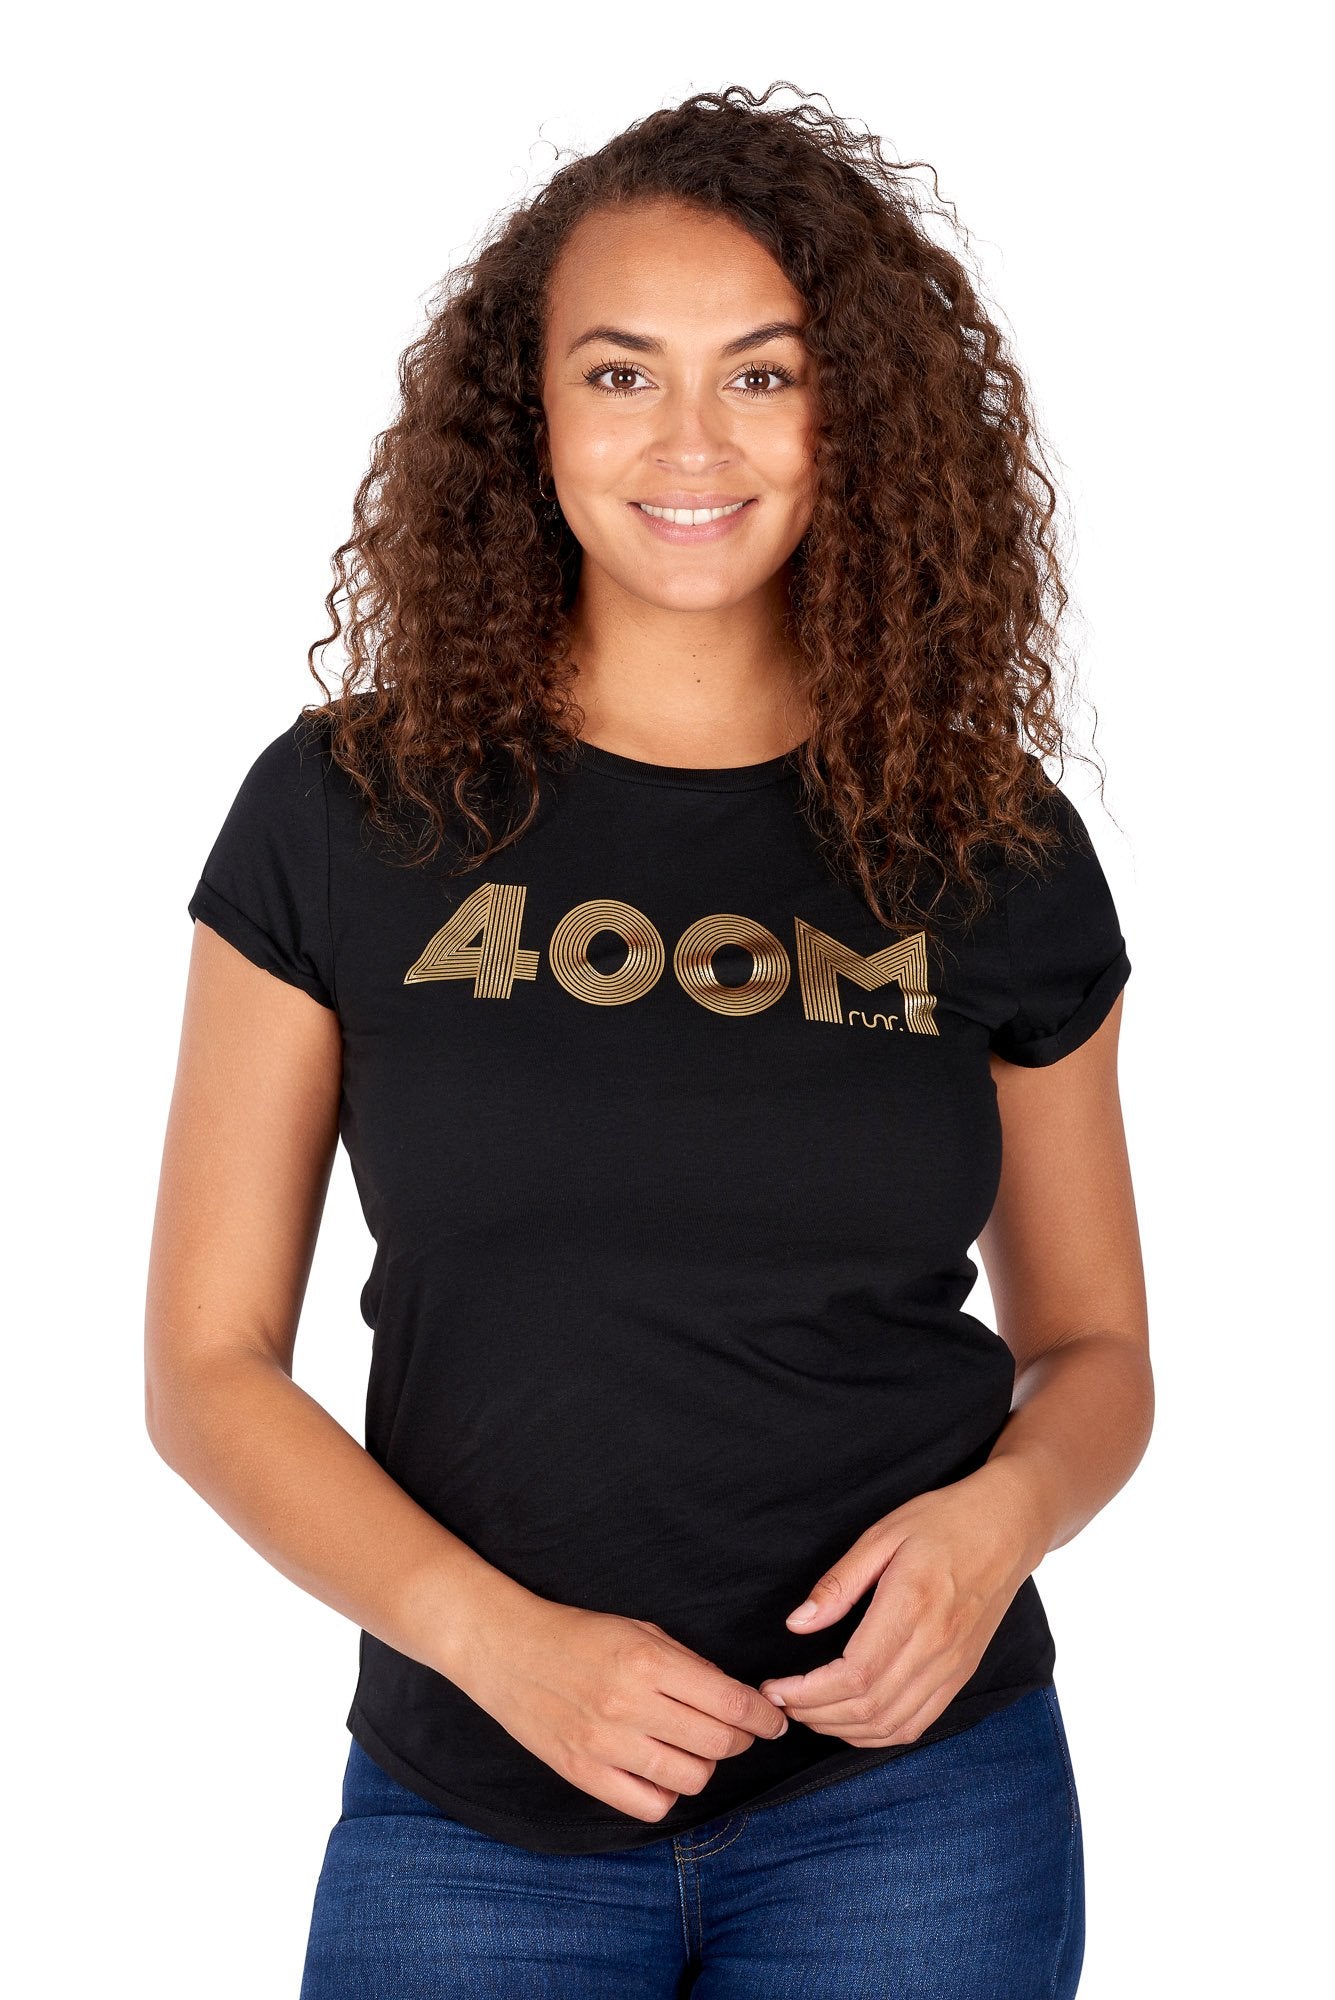 Women's 400M Runr T-Shirts